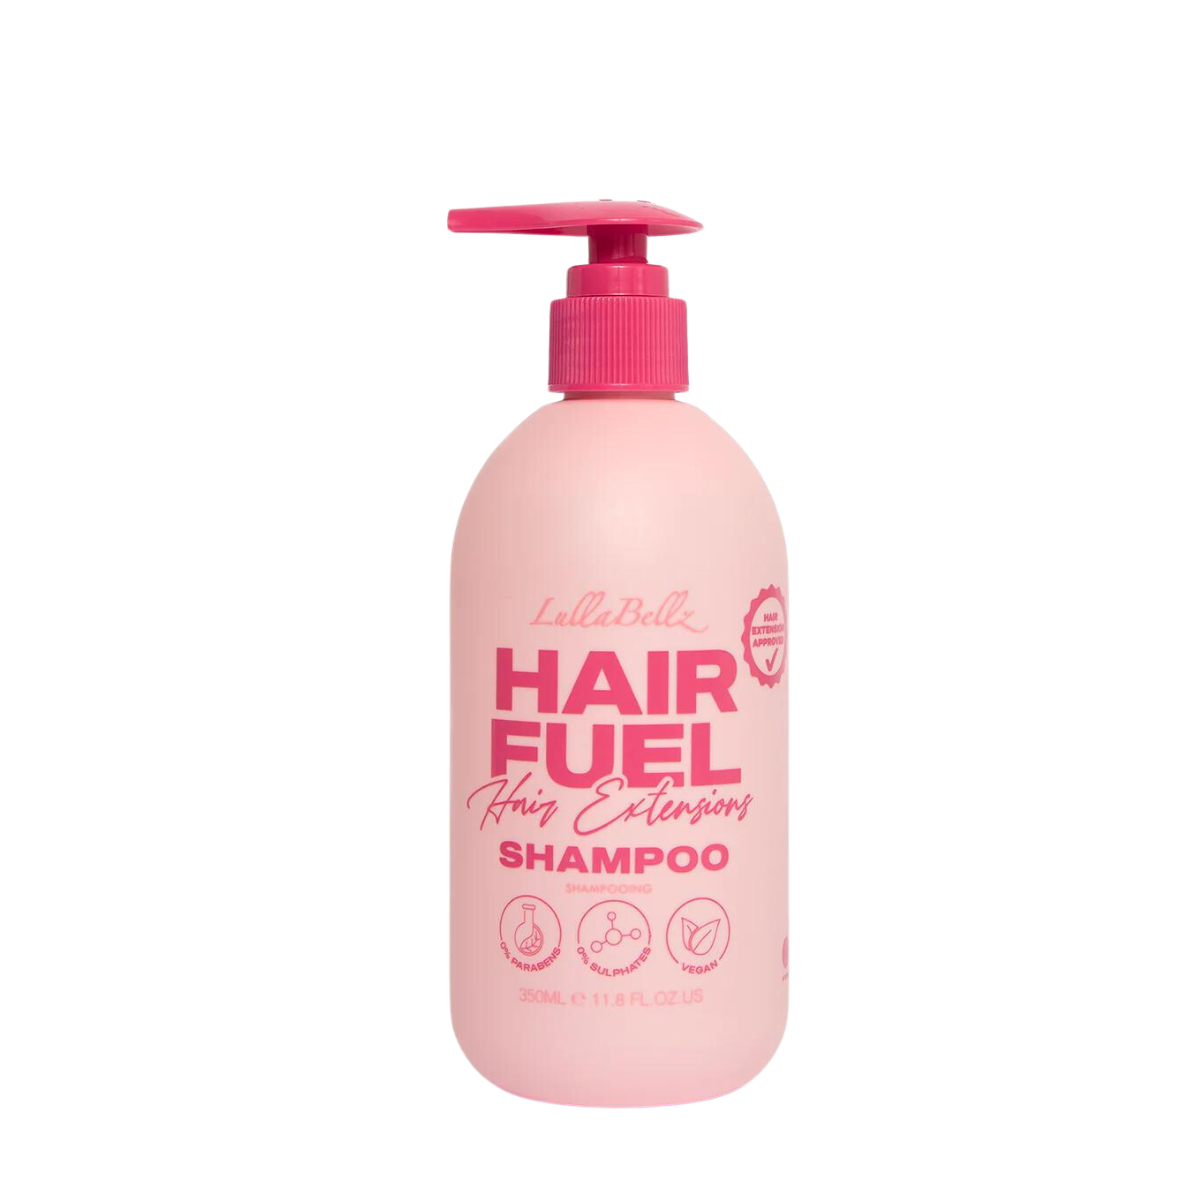 LullaBellz Hair Fuel Hair Extension Shampoo